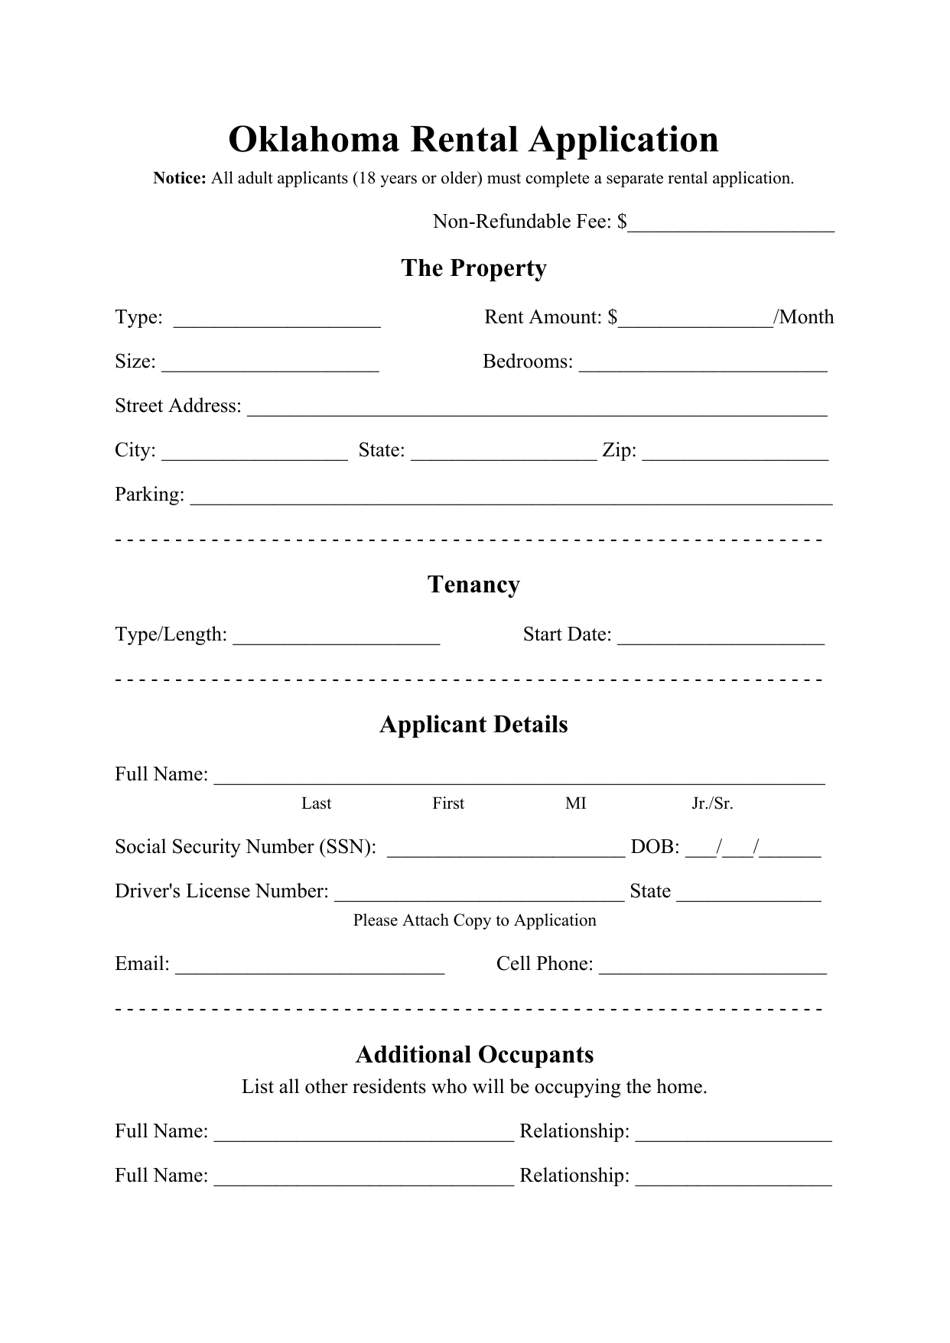 Rental Application Form - Oklahoma, Page 1